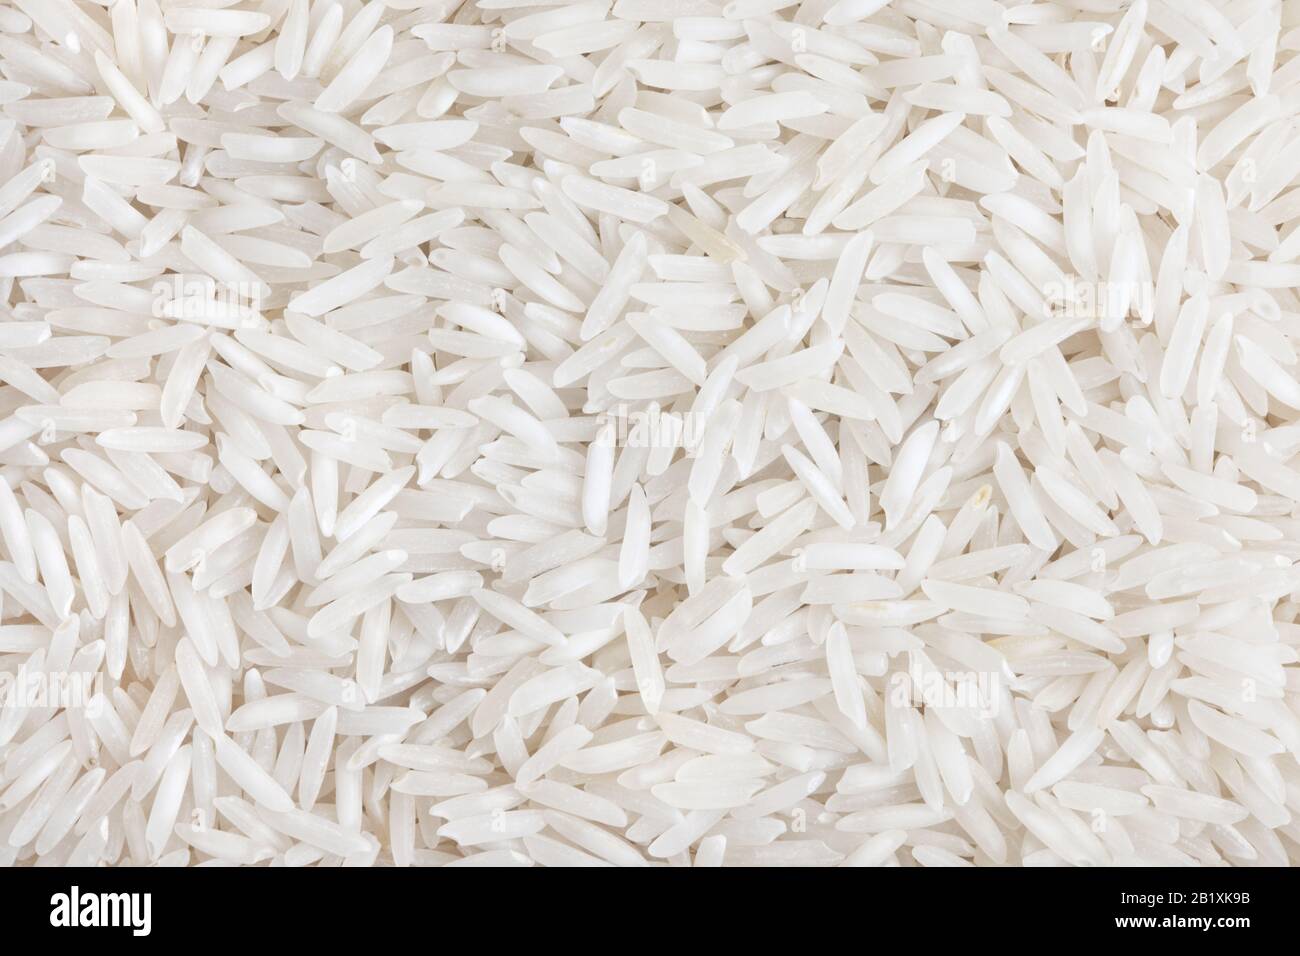 Rice white long-grain texture background. Indian basmati rise Stock ...